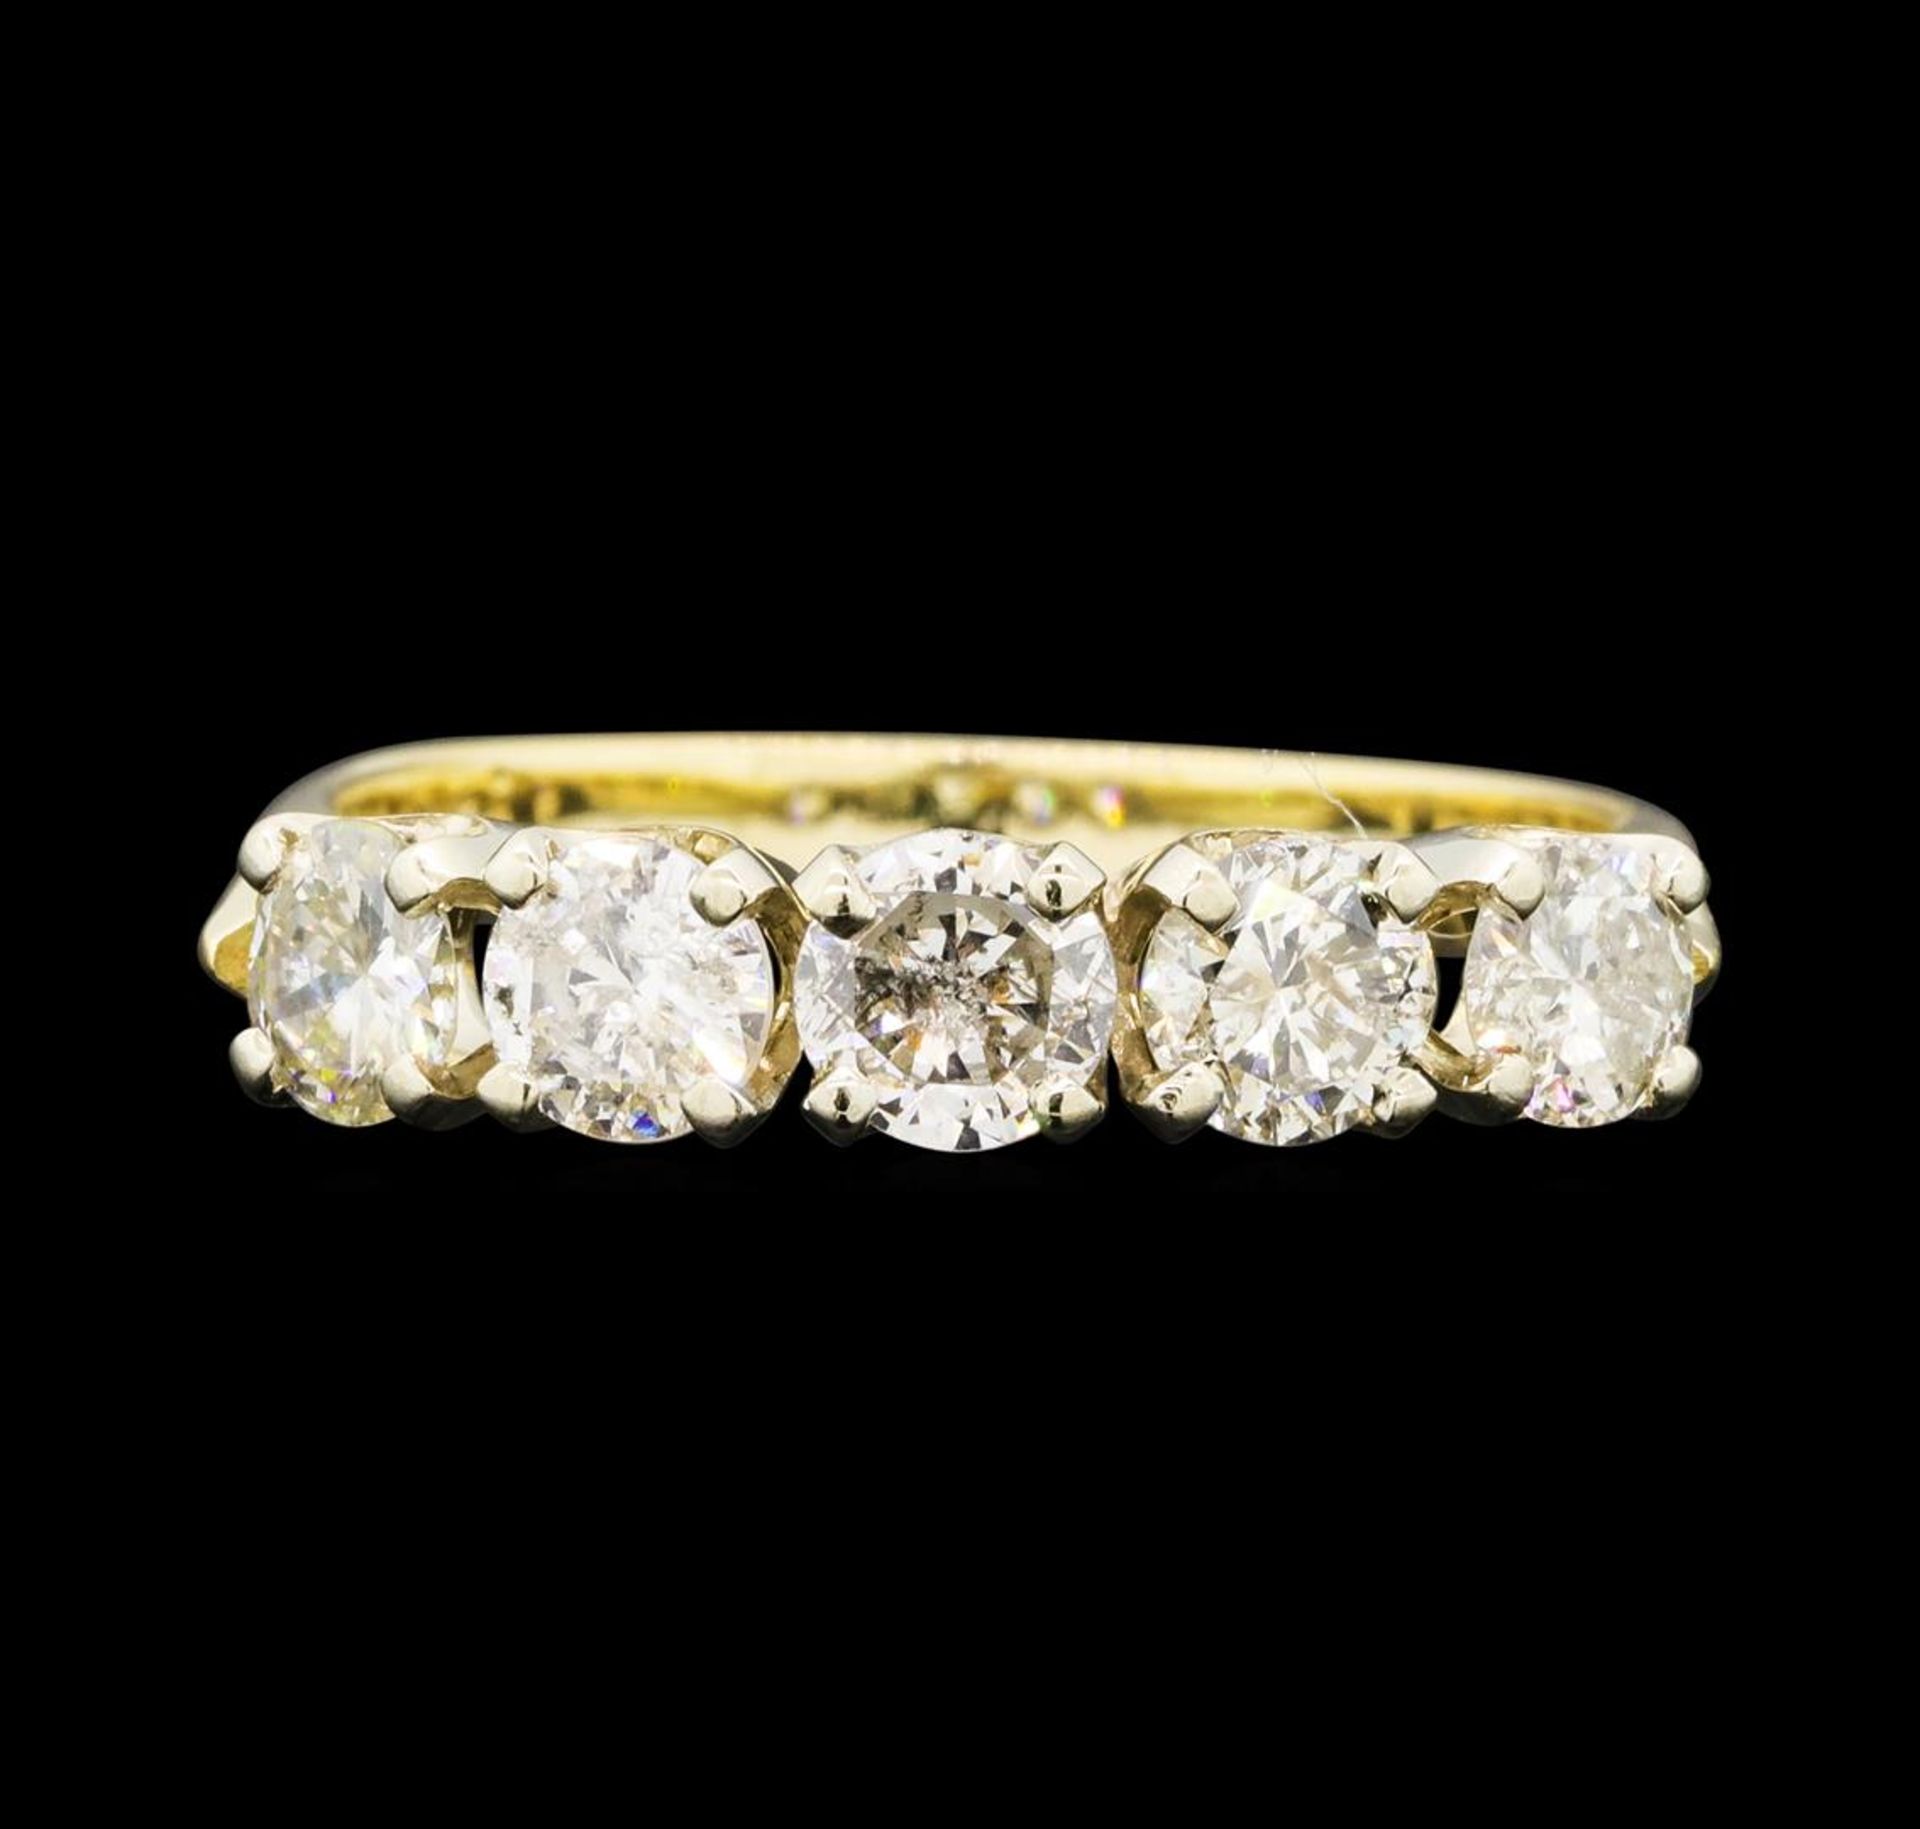 0.90 ctw Diamond Ring - 14KT Yellow Gold - Image 2 of 5